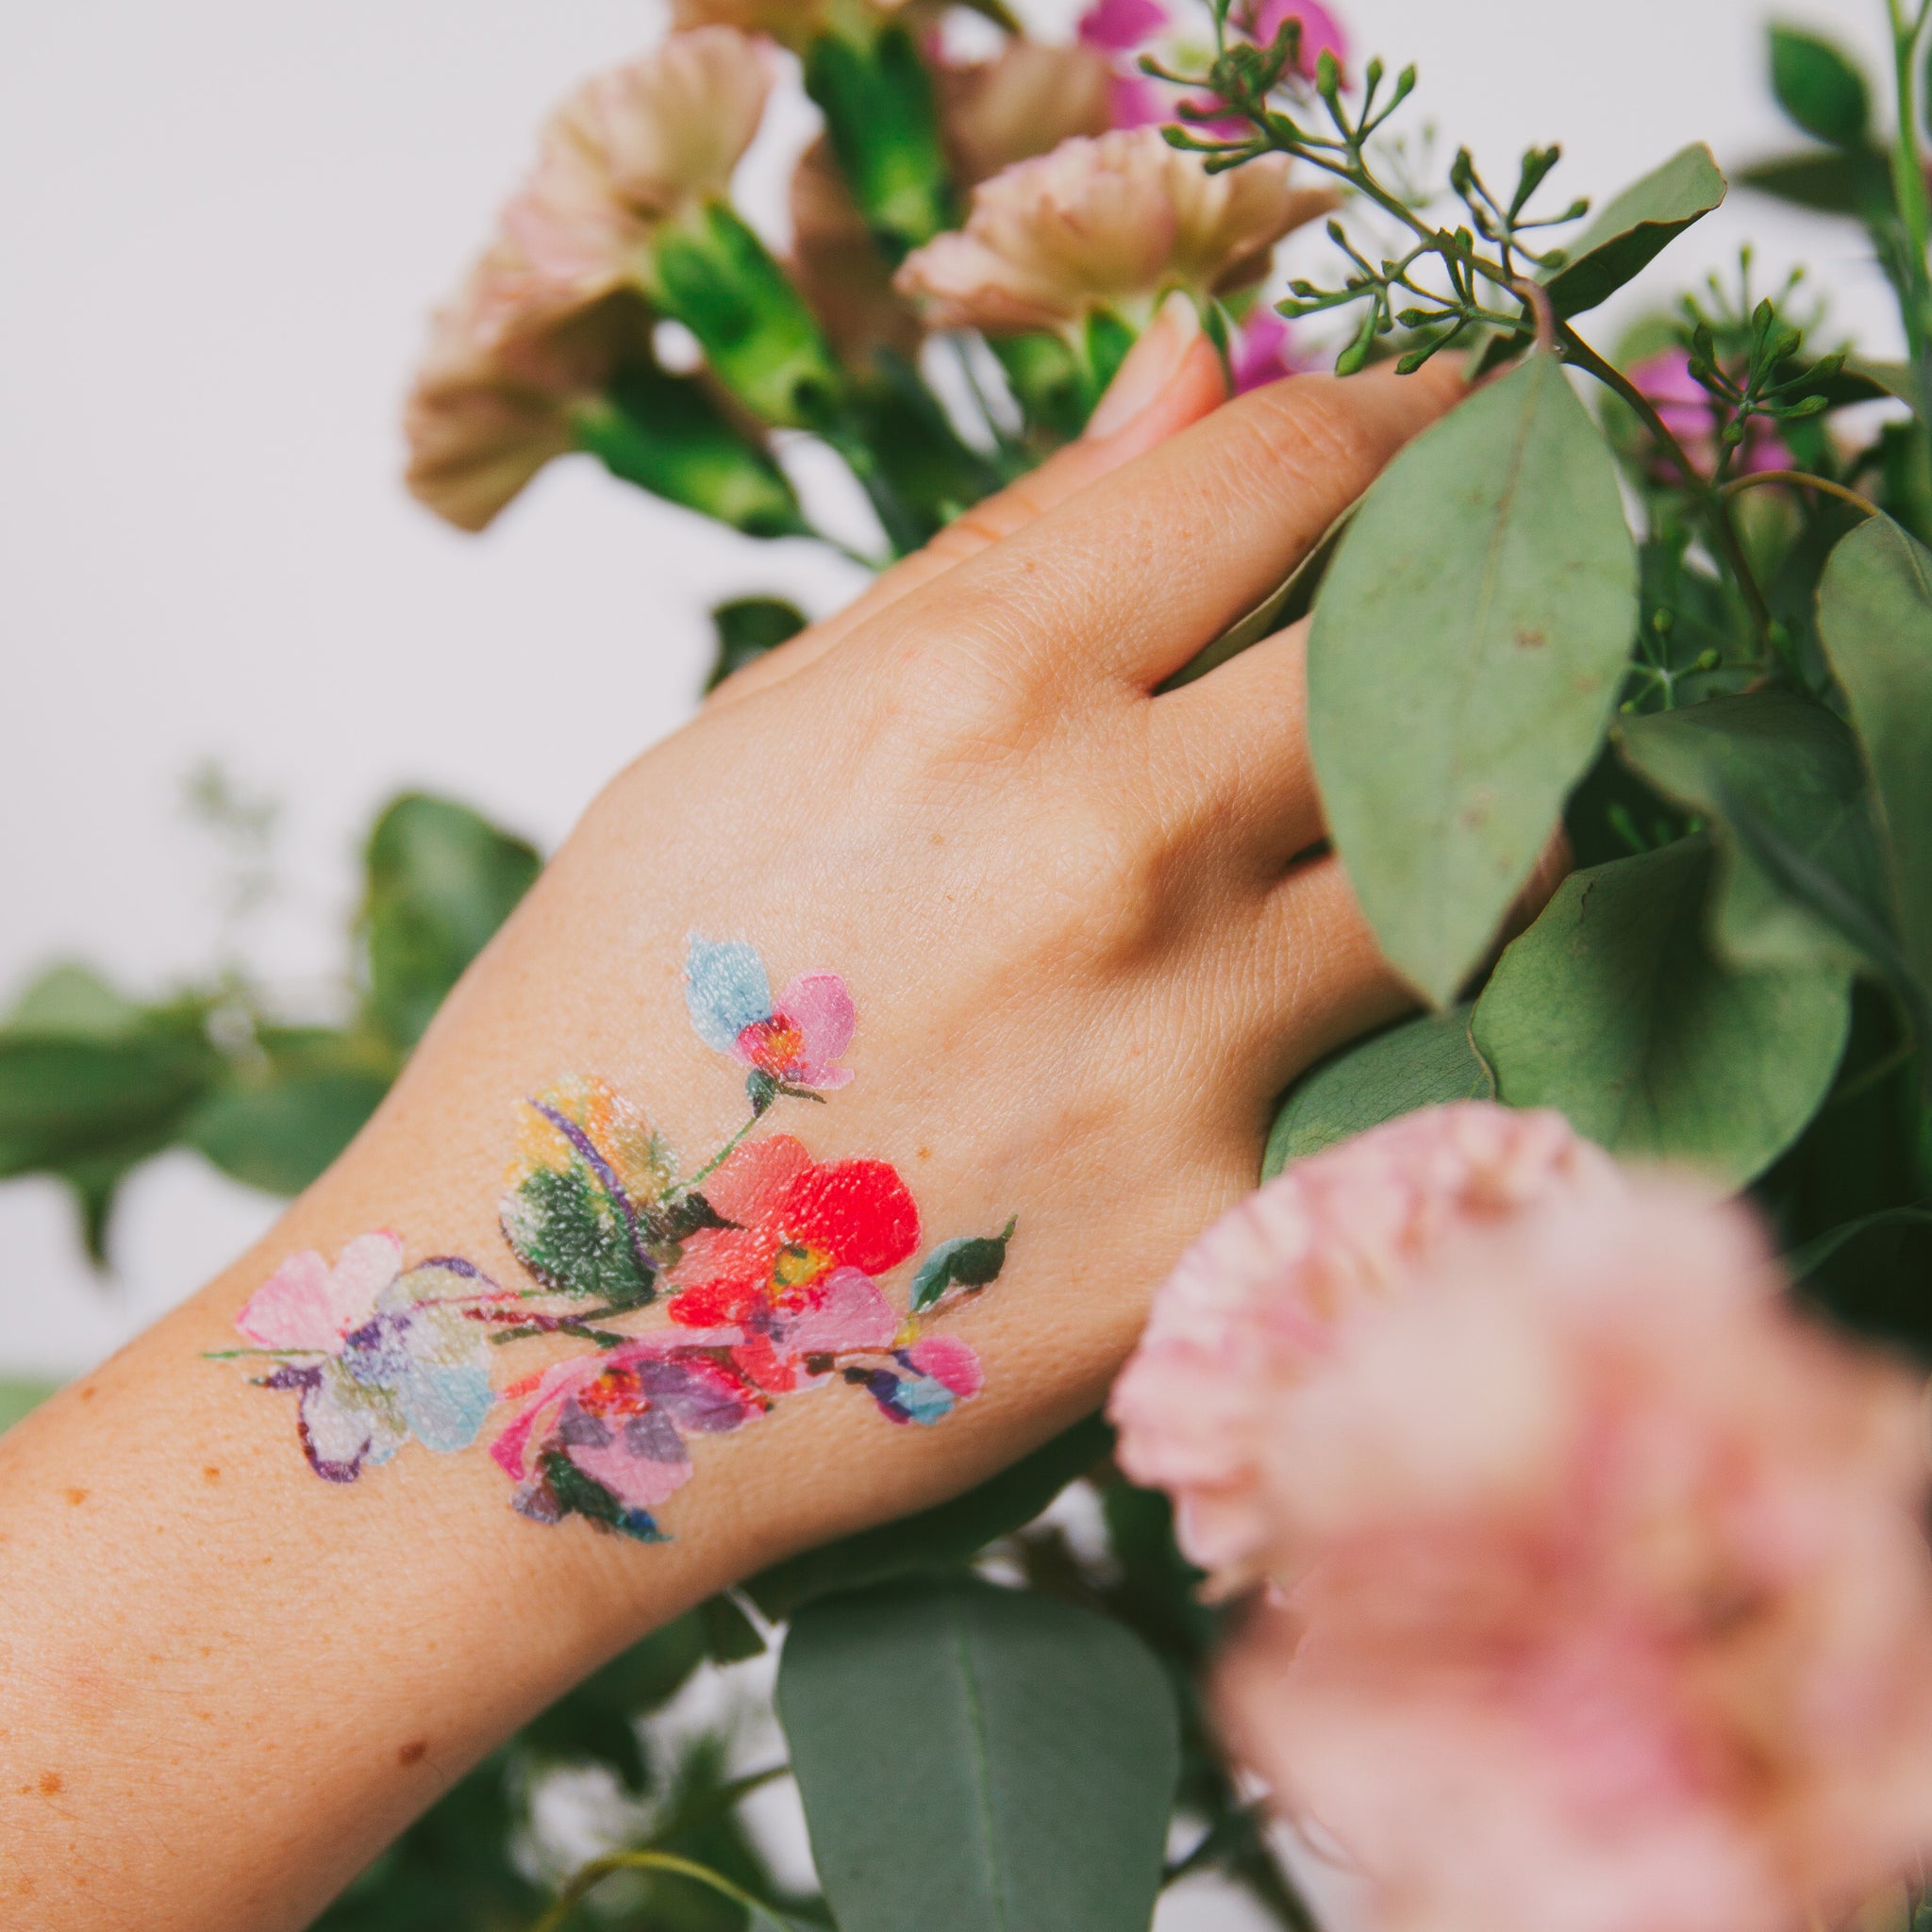 Watercolor Flower Temporary Tattoo - Fake Peony Rose Tattoo Art Sticker  Supplies | eBay